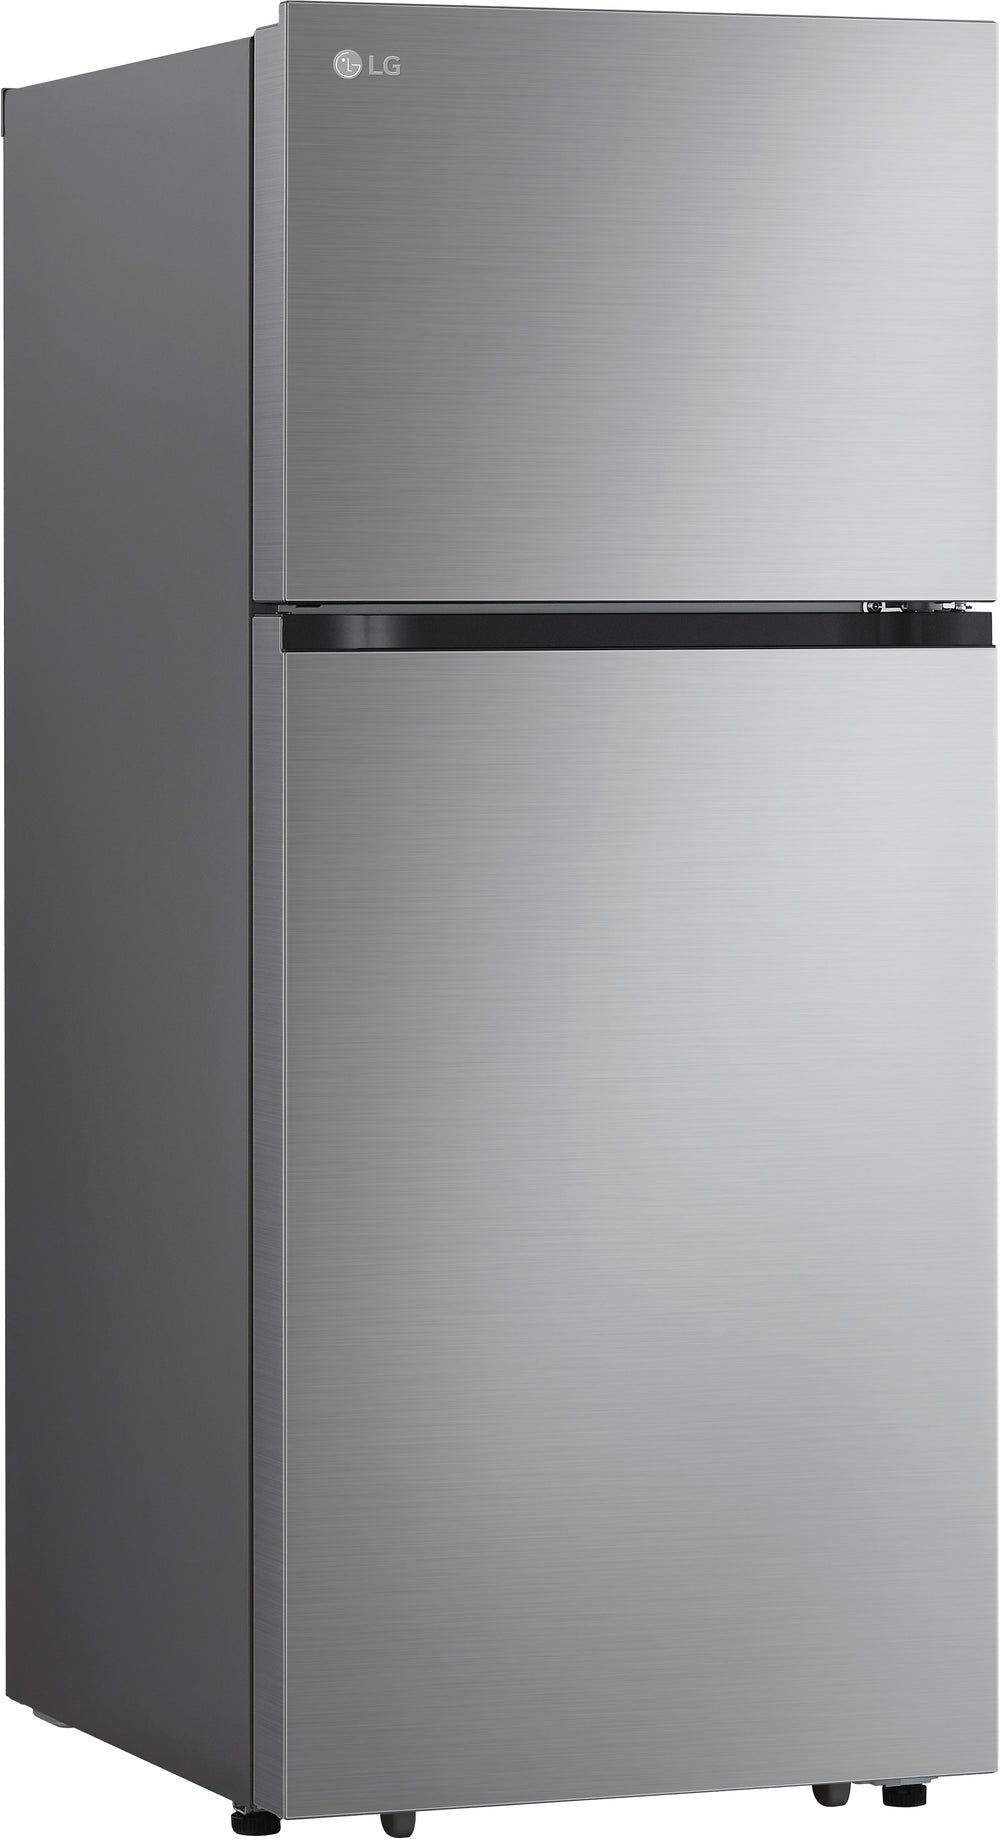 LG - 17.5 Cu. Ft. Top Freezer Refrigerator with Reversible Doors - Stainless Steel_1